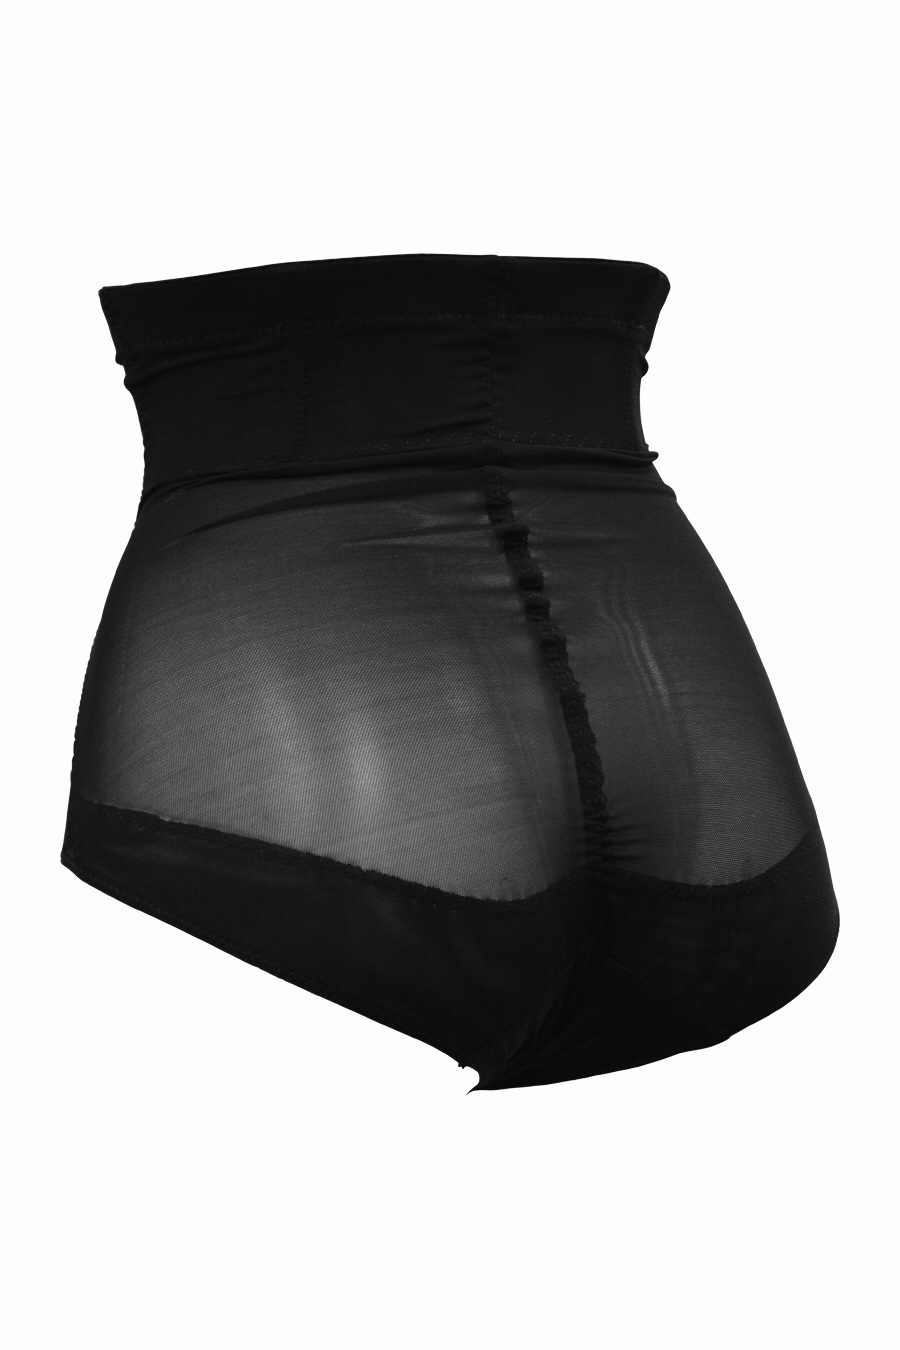 Shapewear - svart trosgördel - Make Secrets underkläder